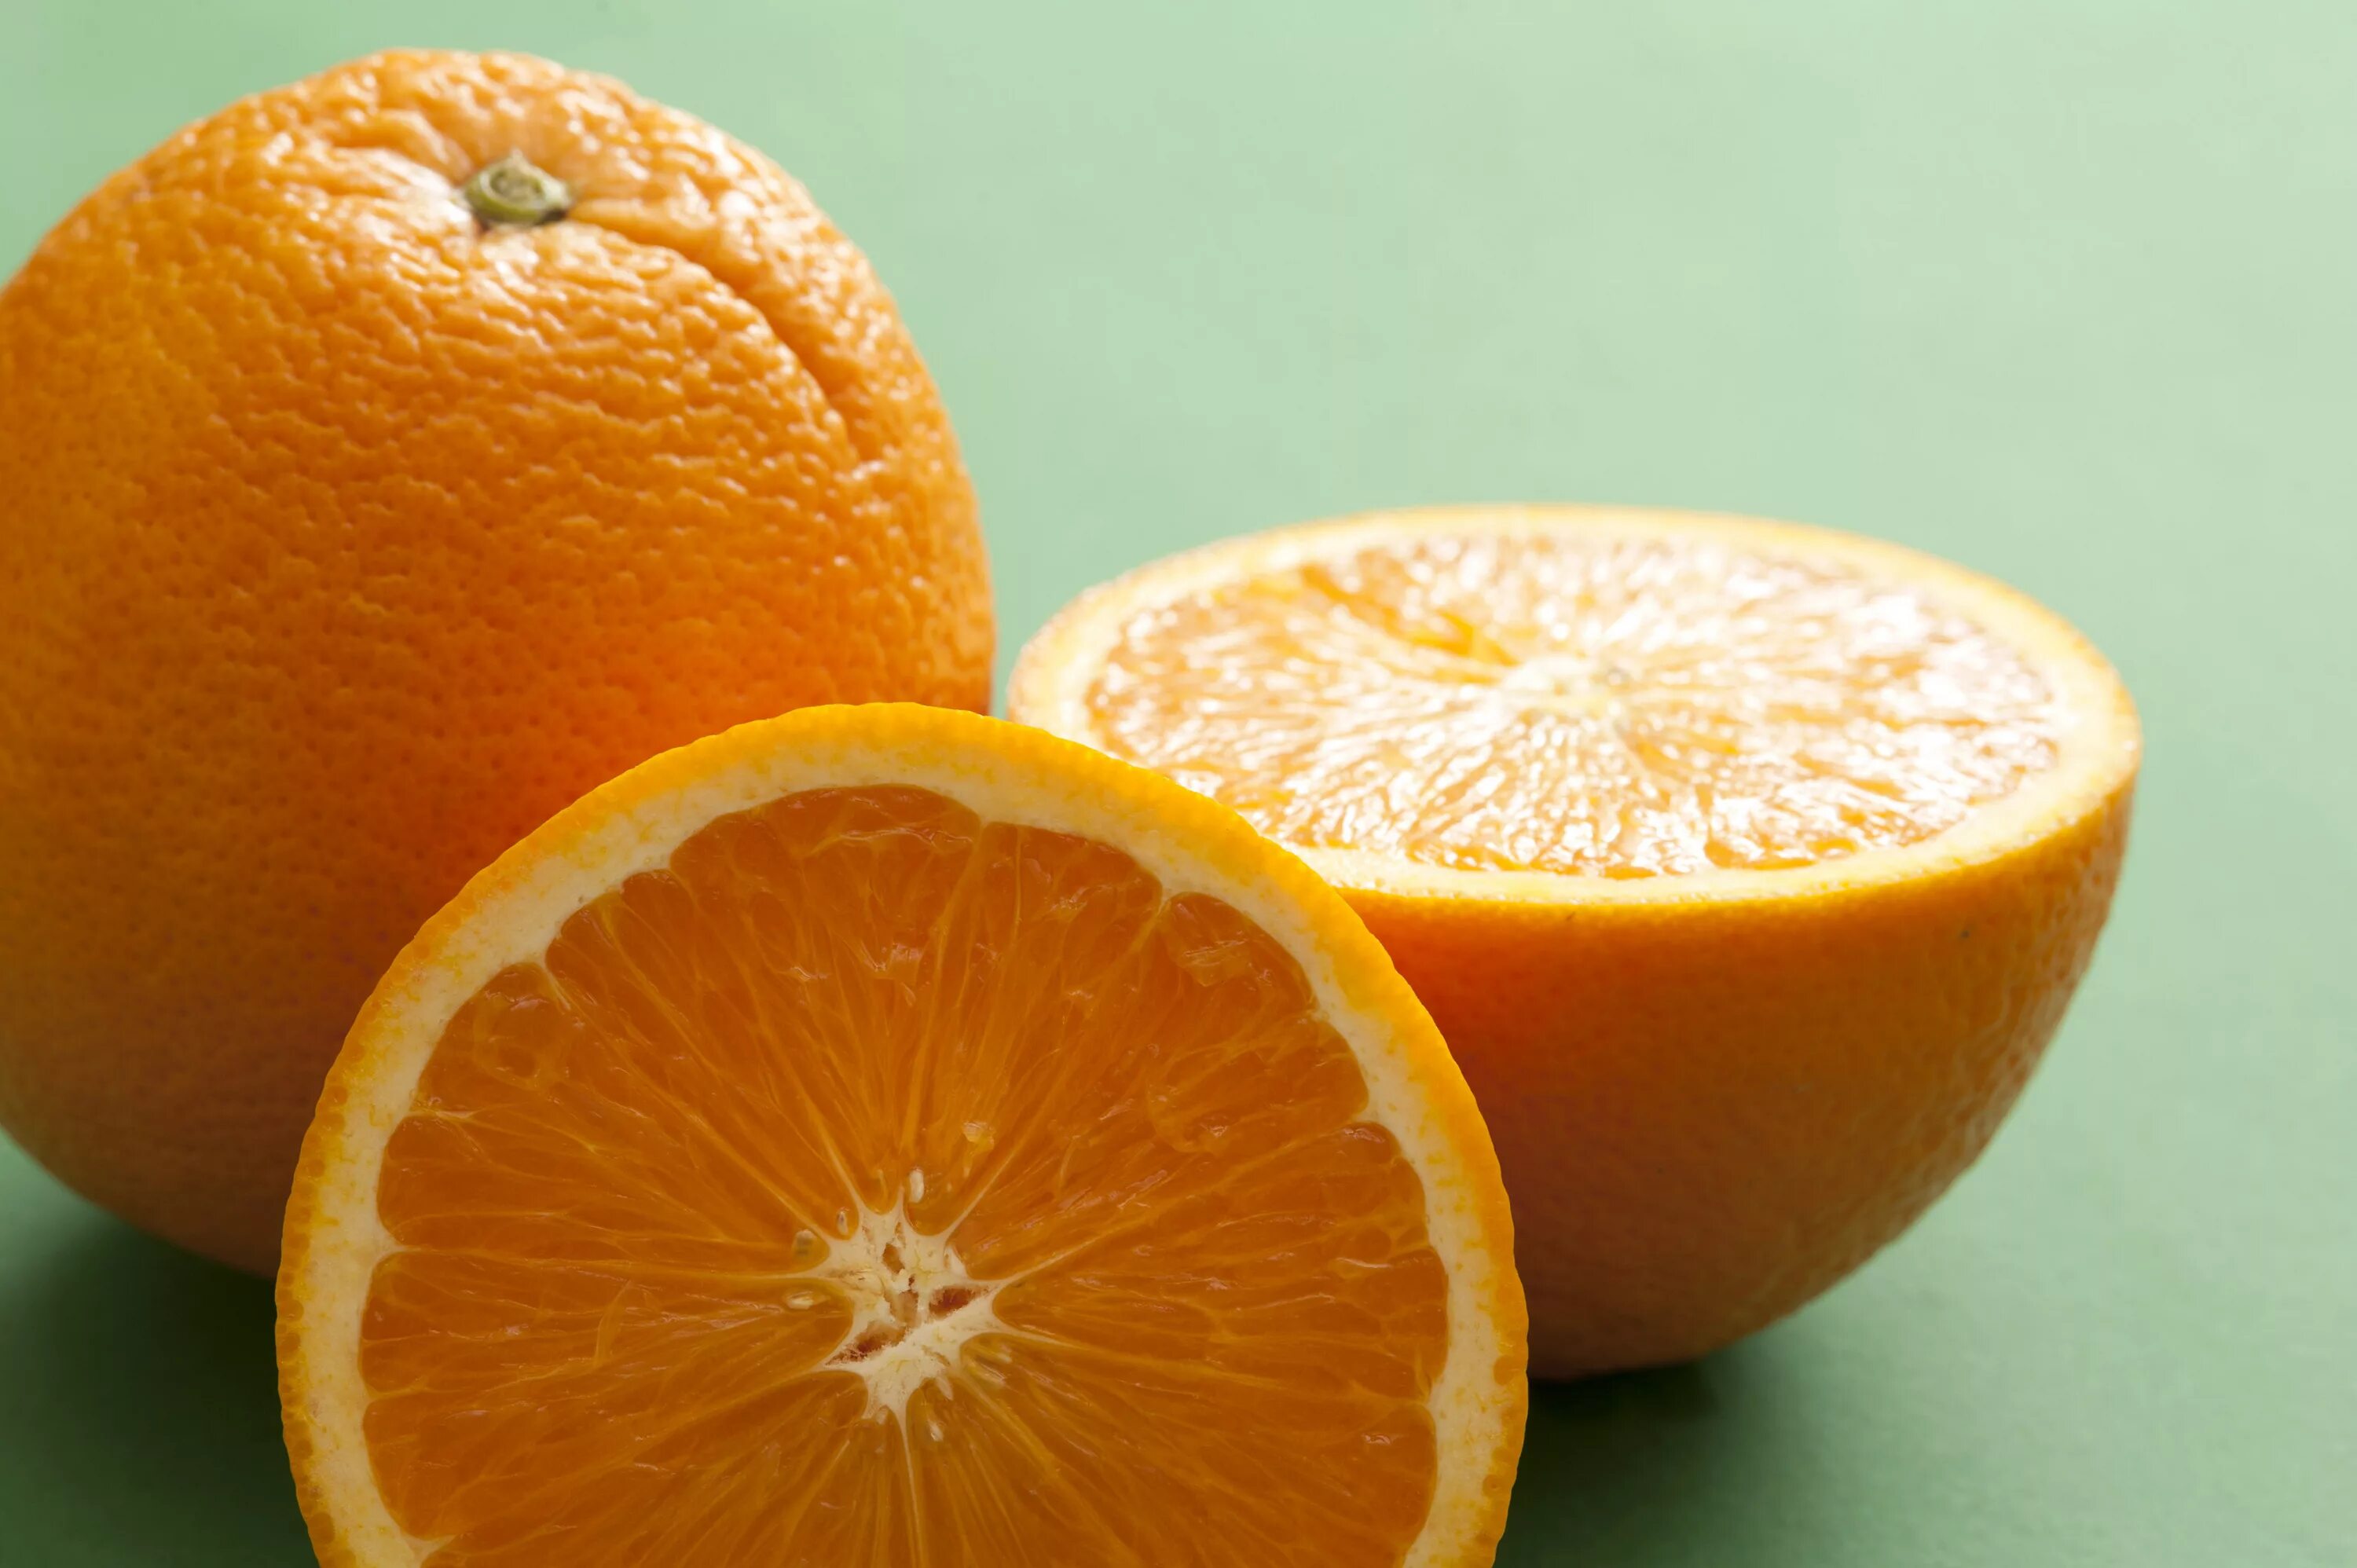 Apelsin 1:1. Апельсин (плод). Оранжевый апельсин. Срез апельсина.